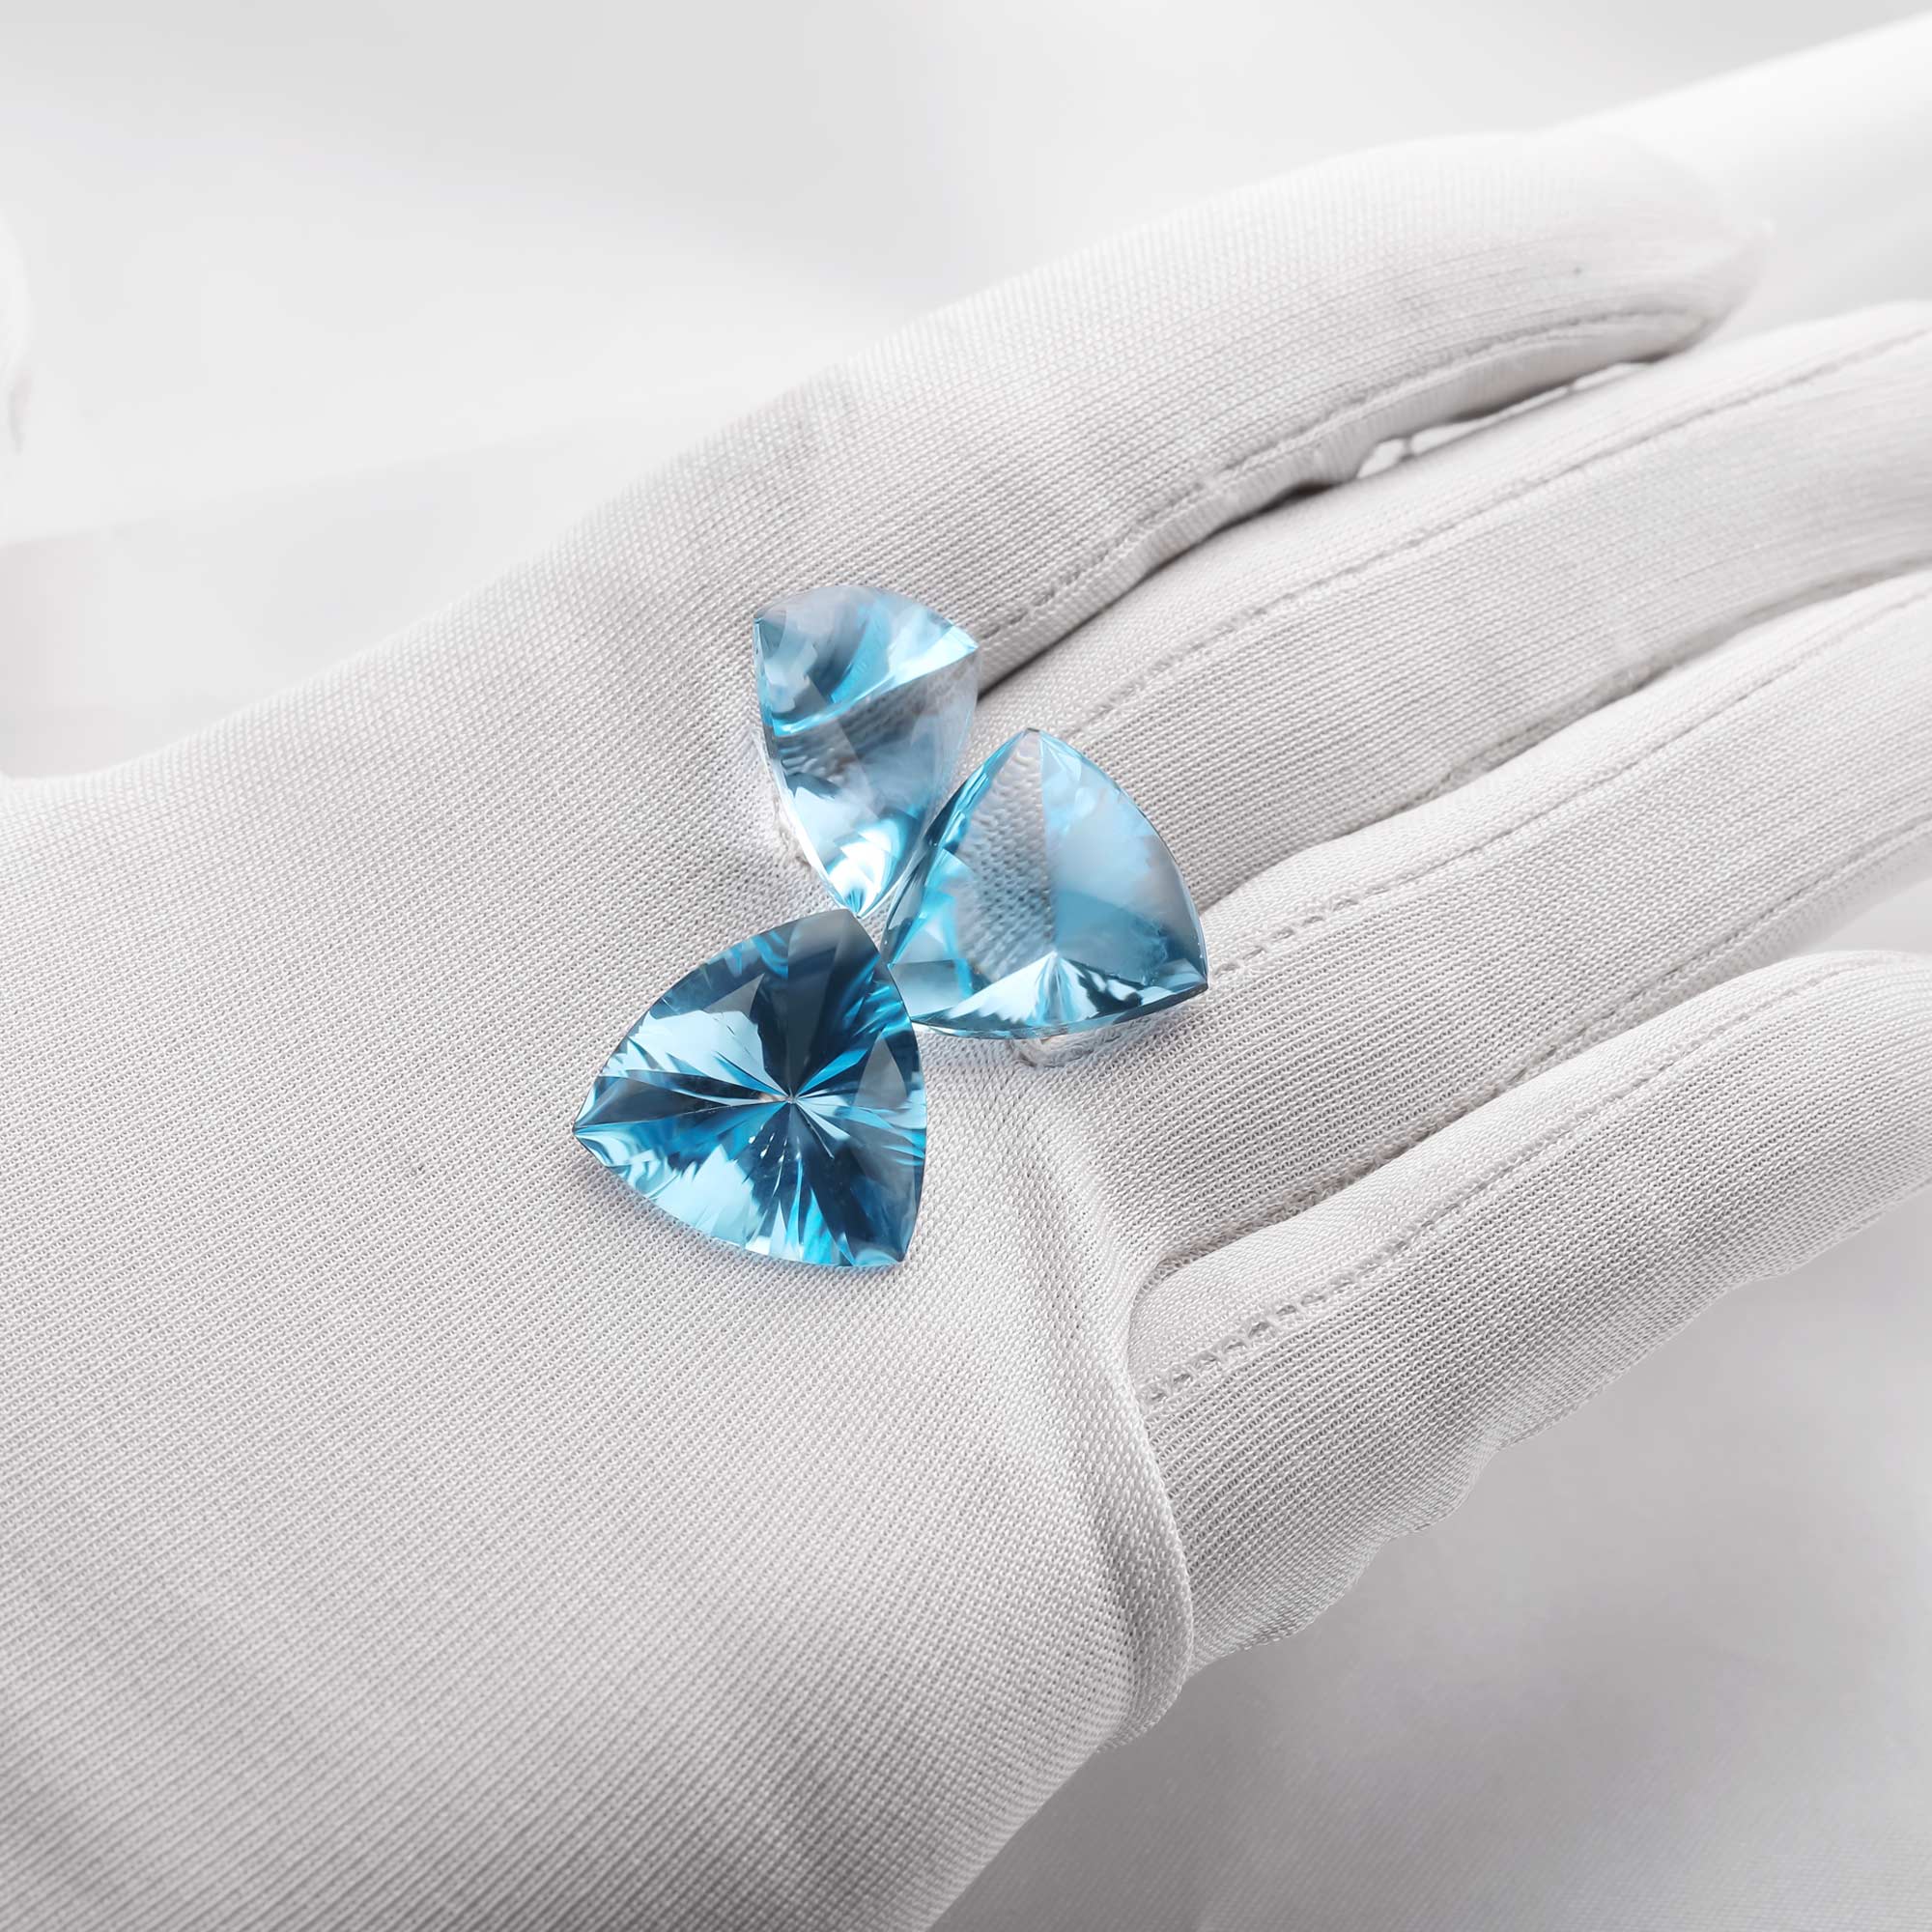 Large Trillion Cut Nature Swiss Blue Topaz Gemstone,November Birthstone,Blue Triangle Gemstone,DIY Jewelry Supplies - Click Image to Close